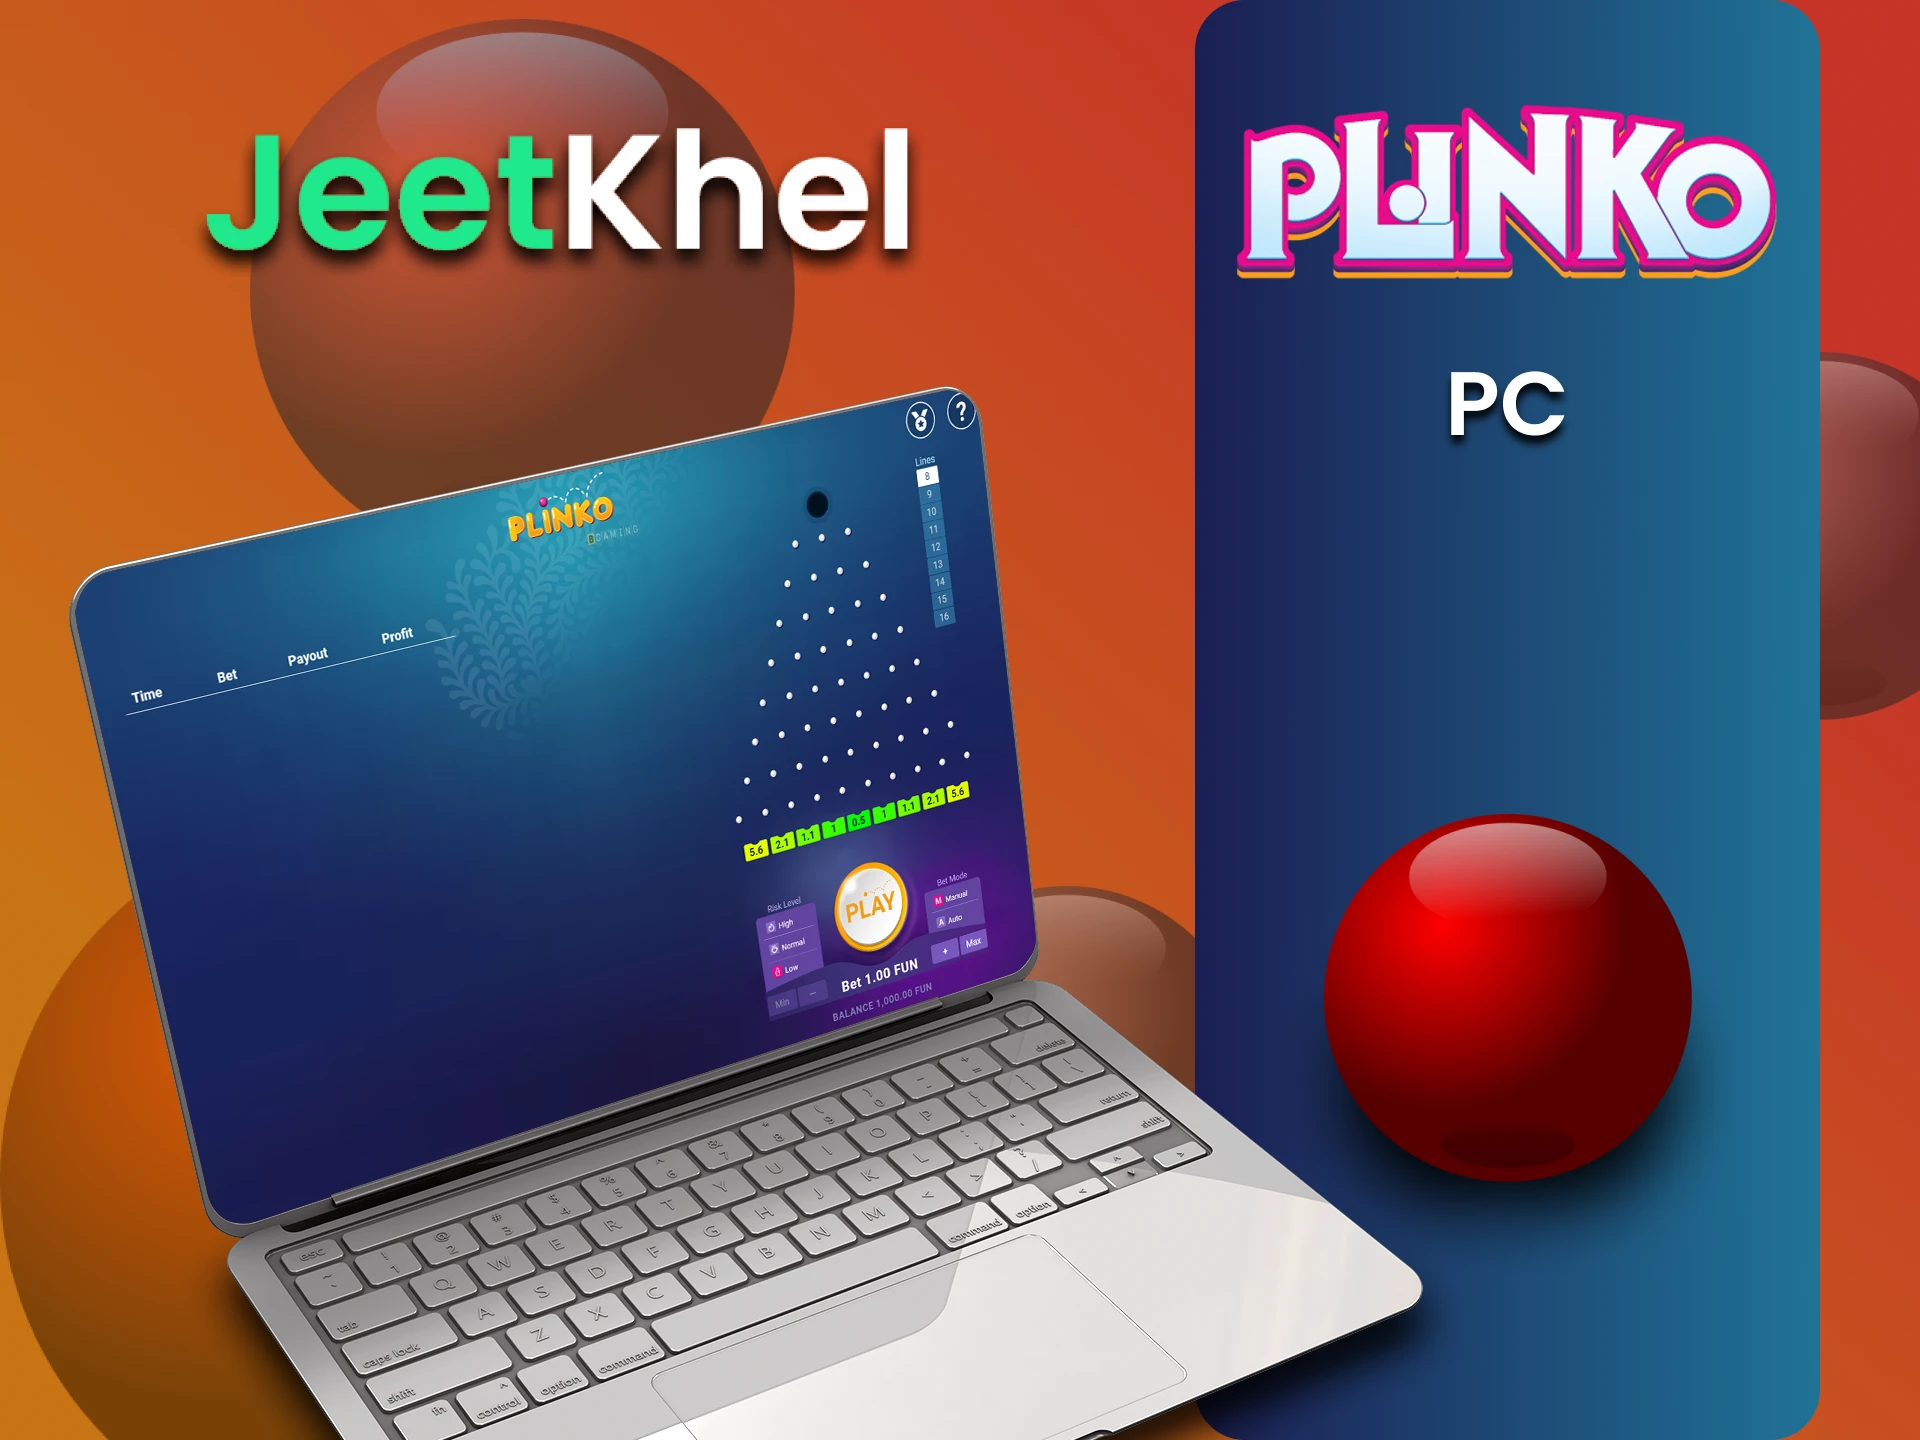 Play Plinko on JeetKhel website via PC.